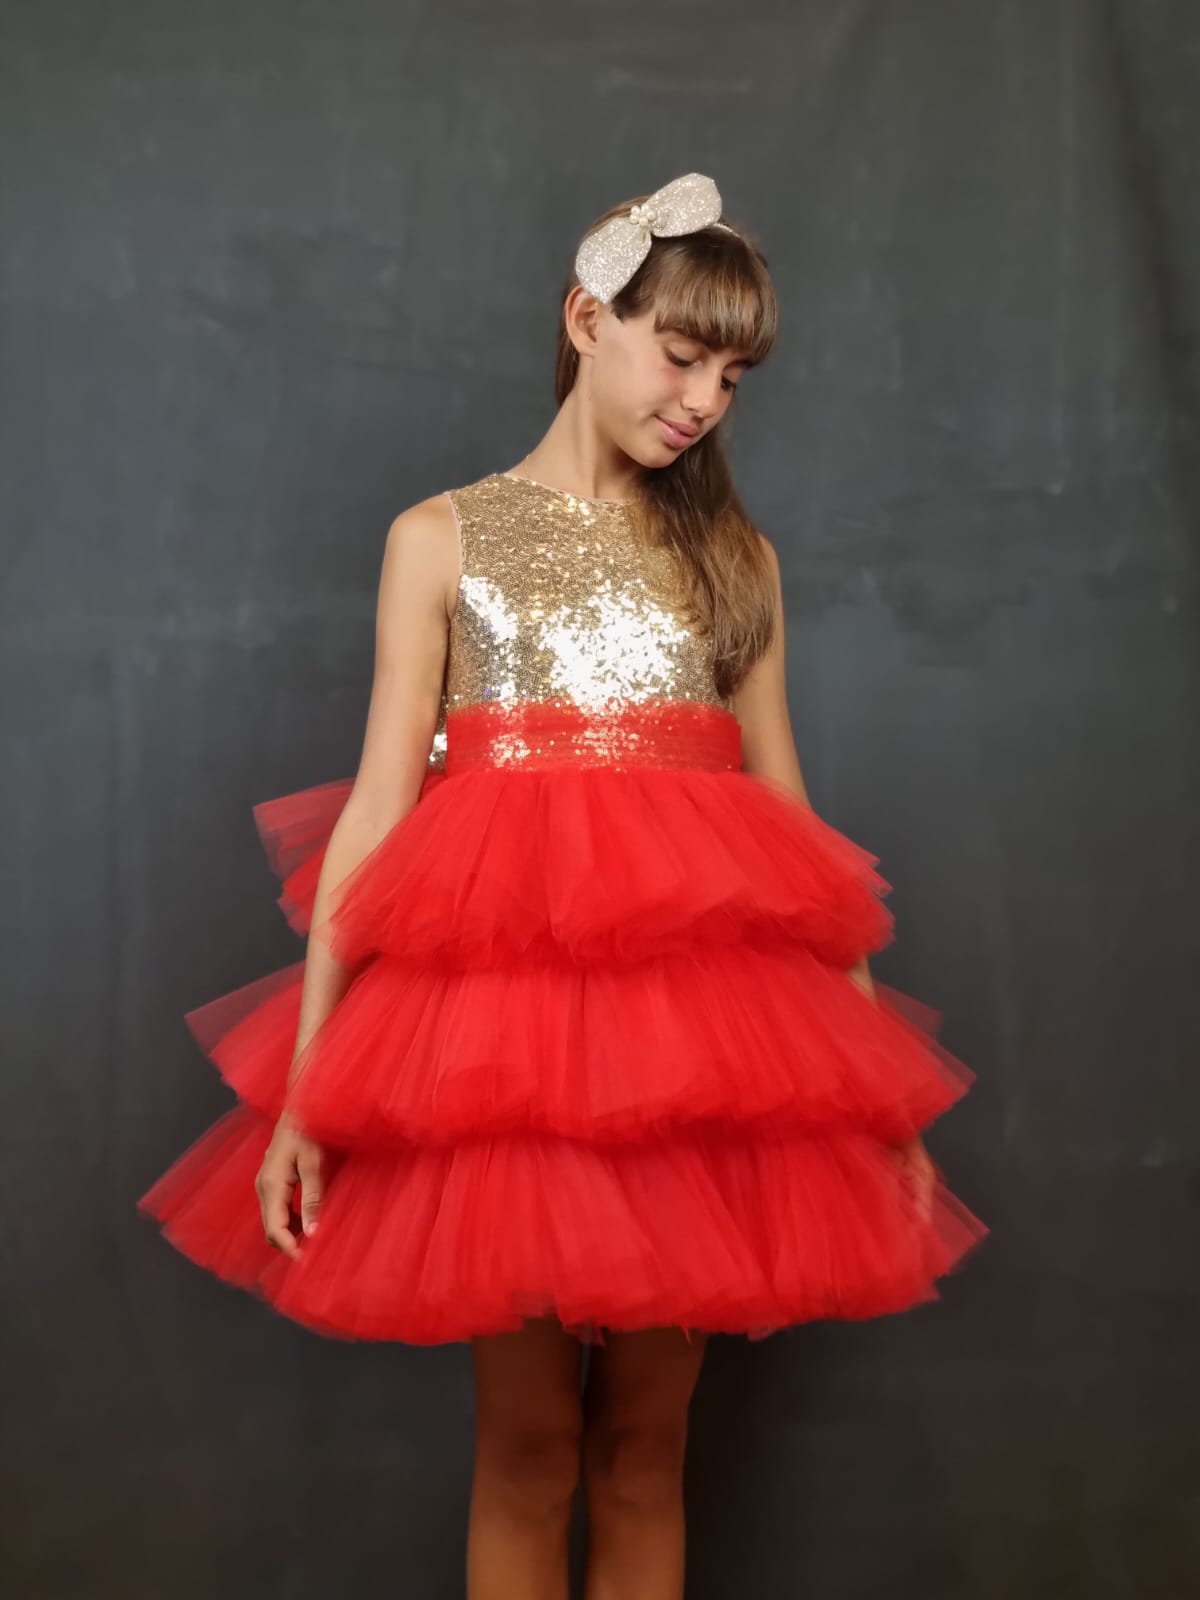 cocobee-Red and Glod Ruffle Dress Princess Andrada-1